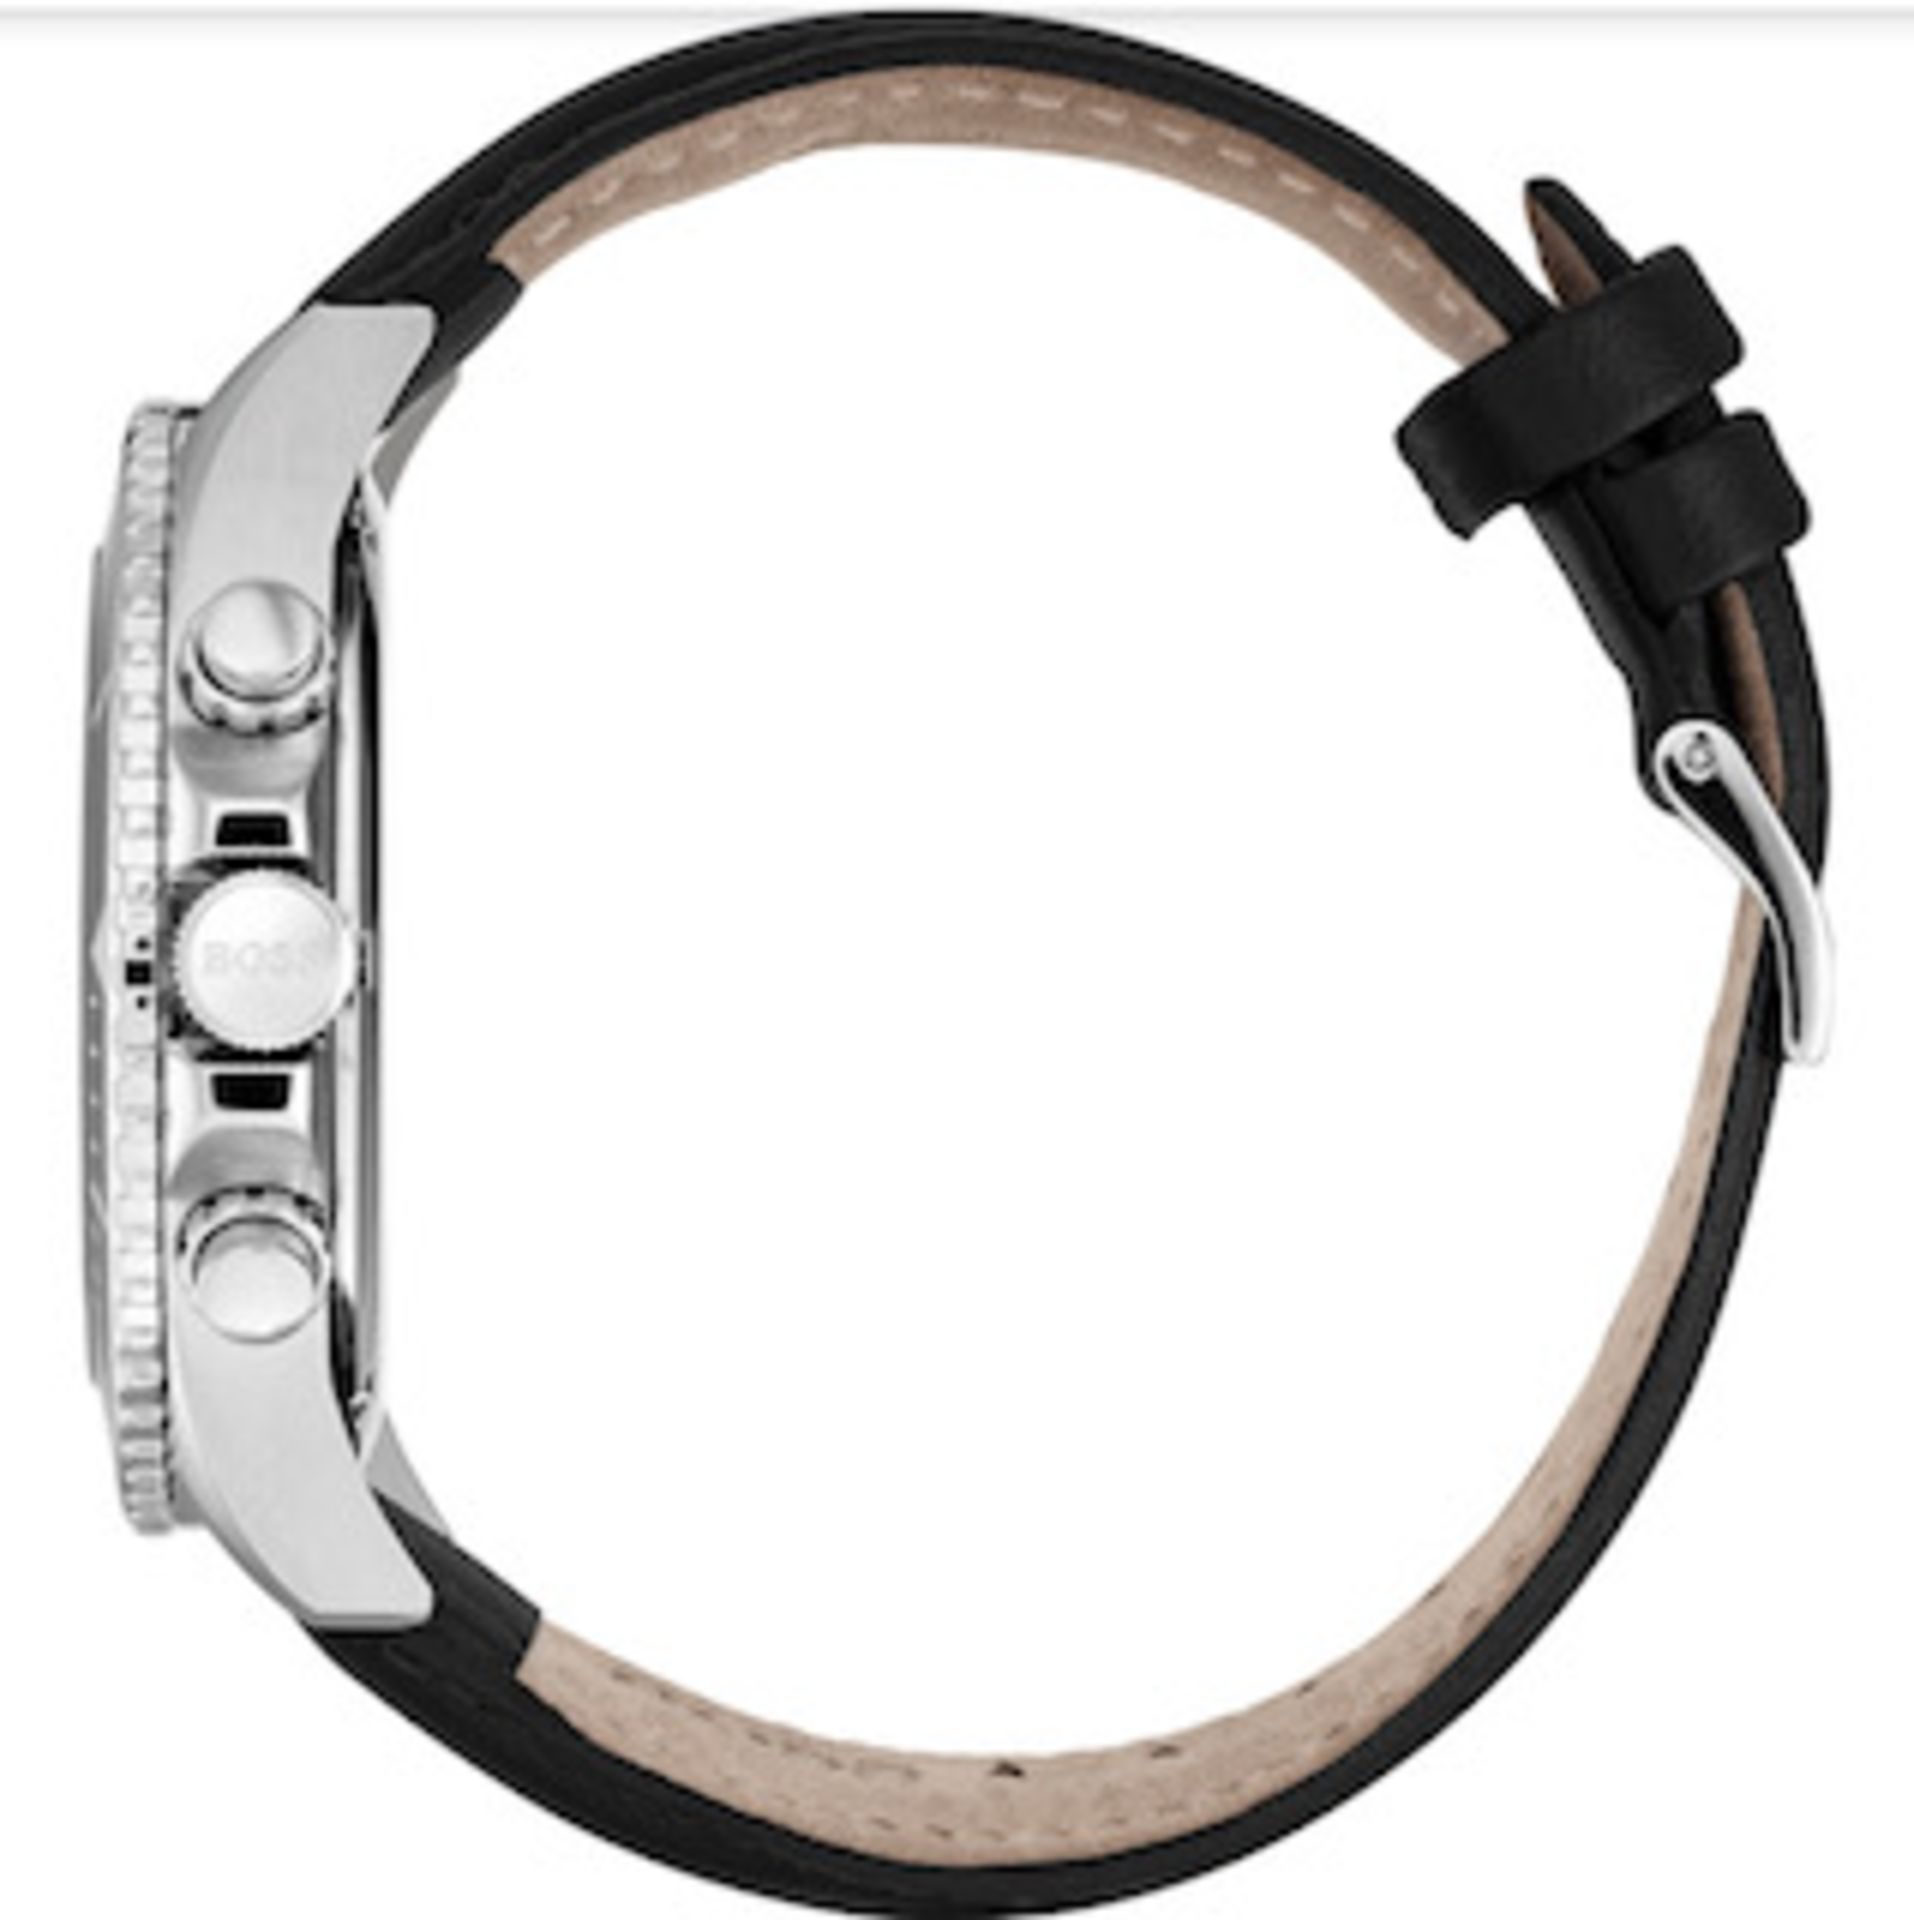 Hugo Boss 1513697 Men's Ocean Edition Black Leather Strap Chronograph Watch - Image 5 of 5